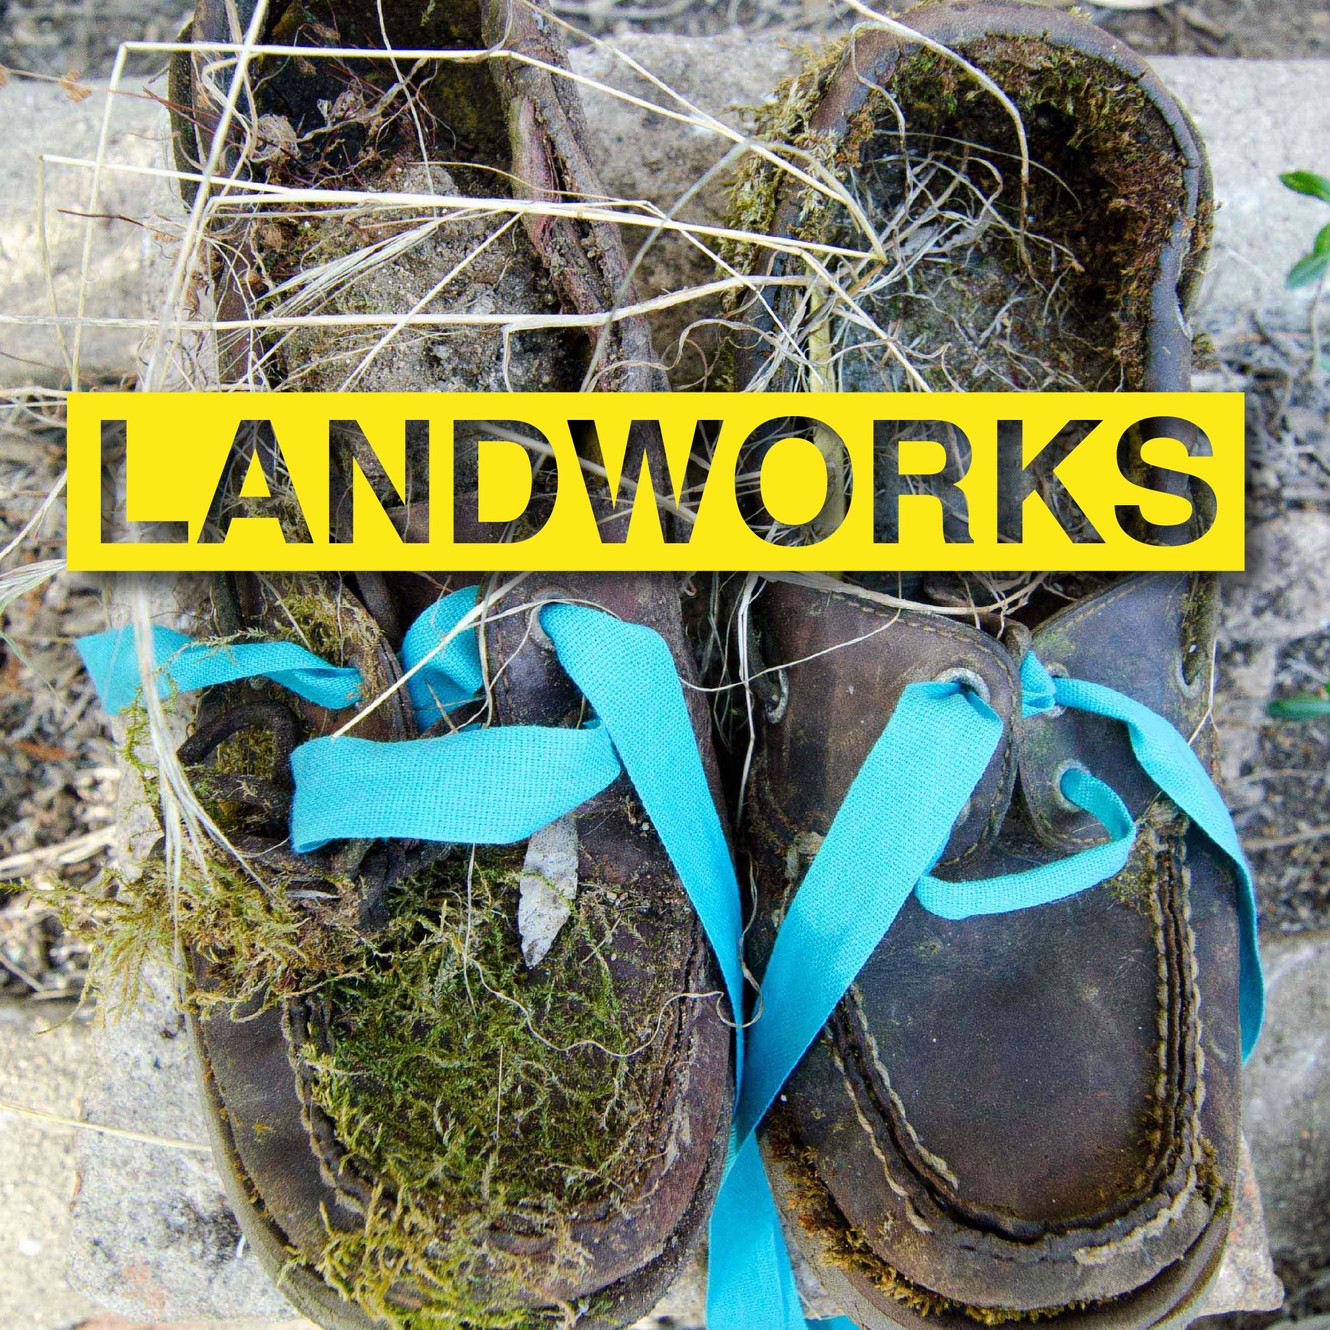 www.landworks.site